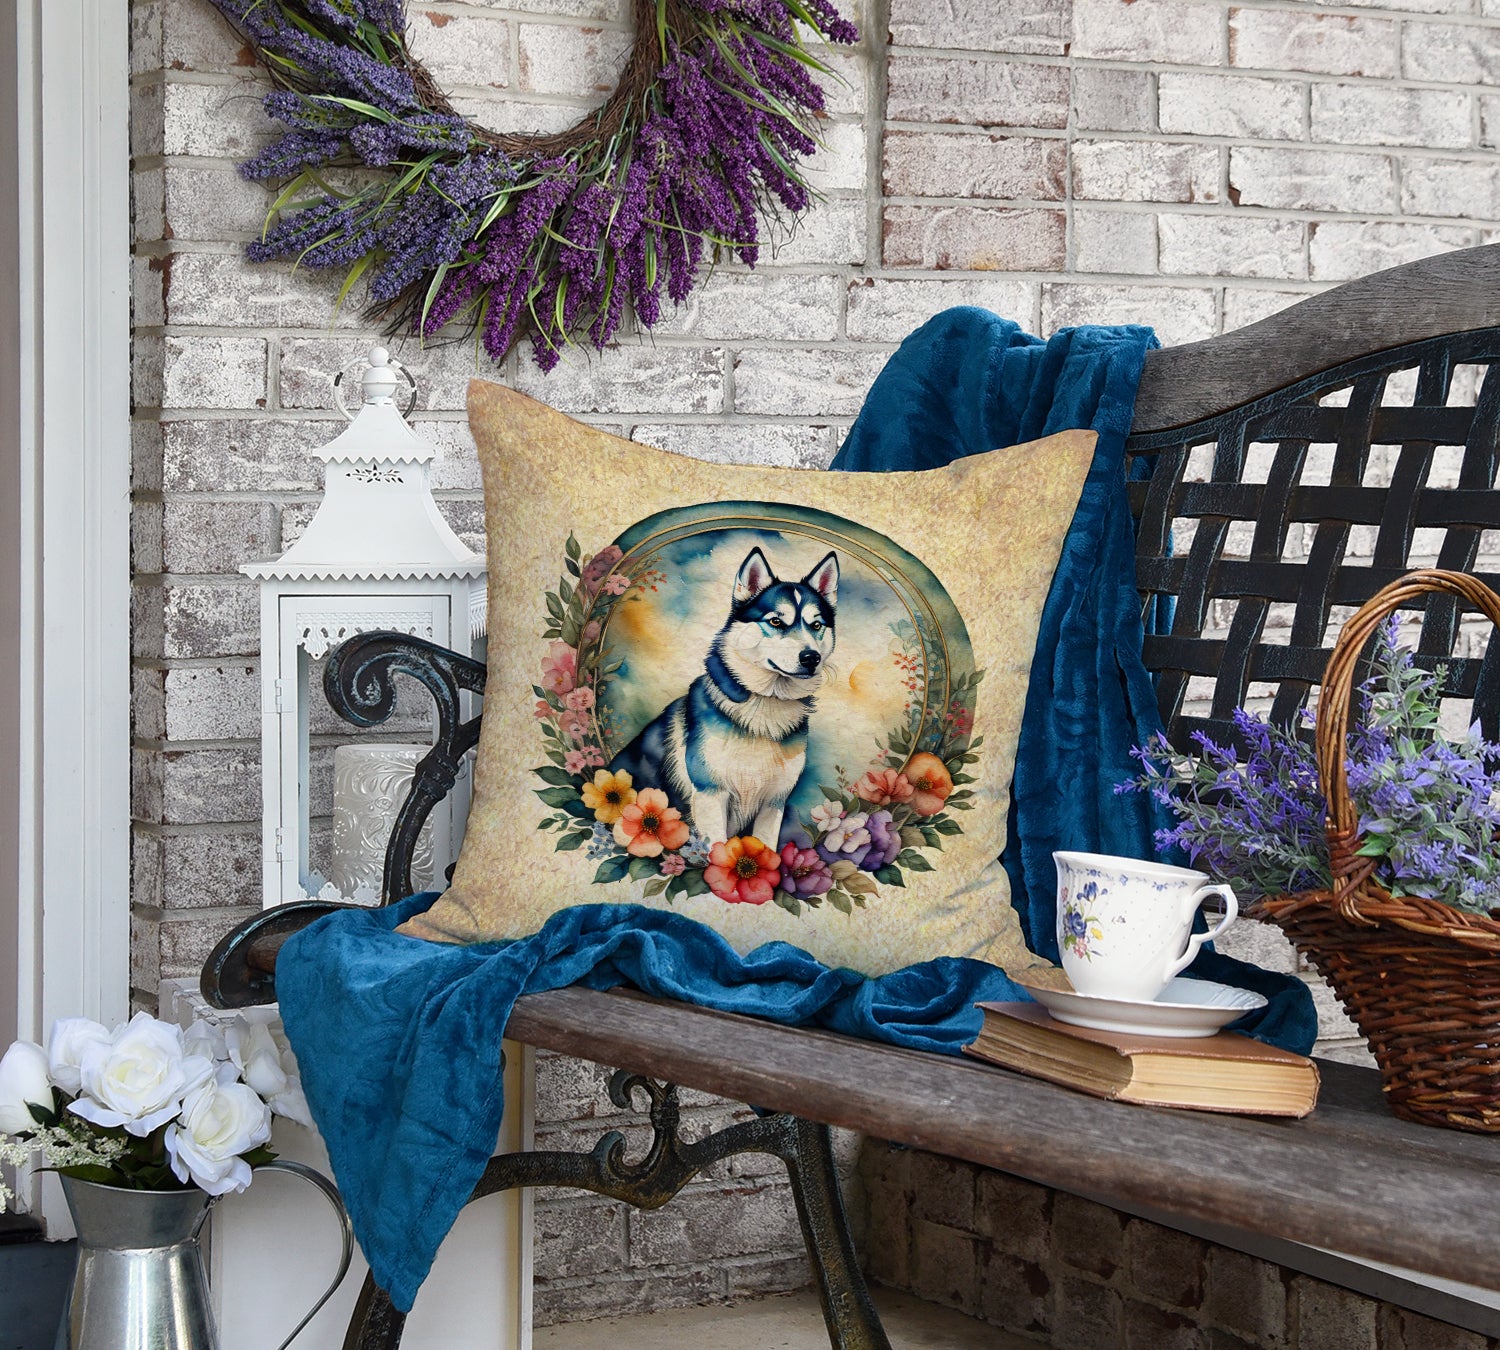 Siberian Husky and Flowers Fabric Decorative Pillow